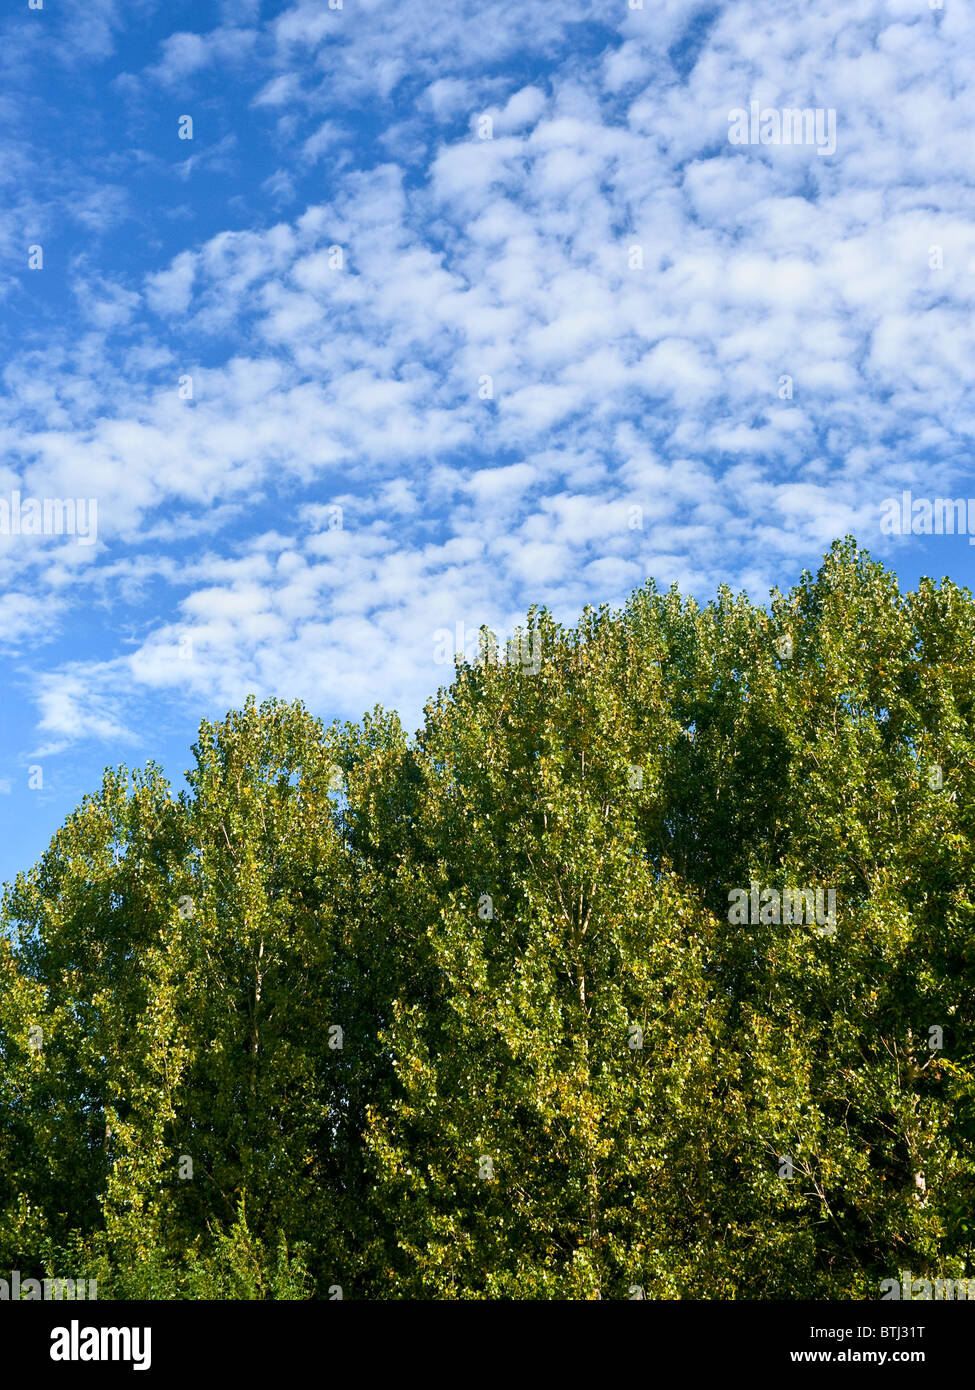 Mackerel sky / Altocumulus clouds and Poplar trees - France. Stock Photo